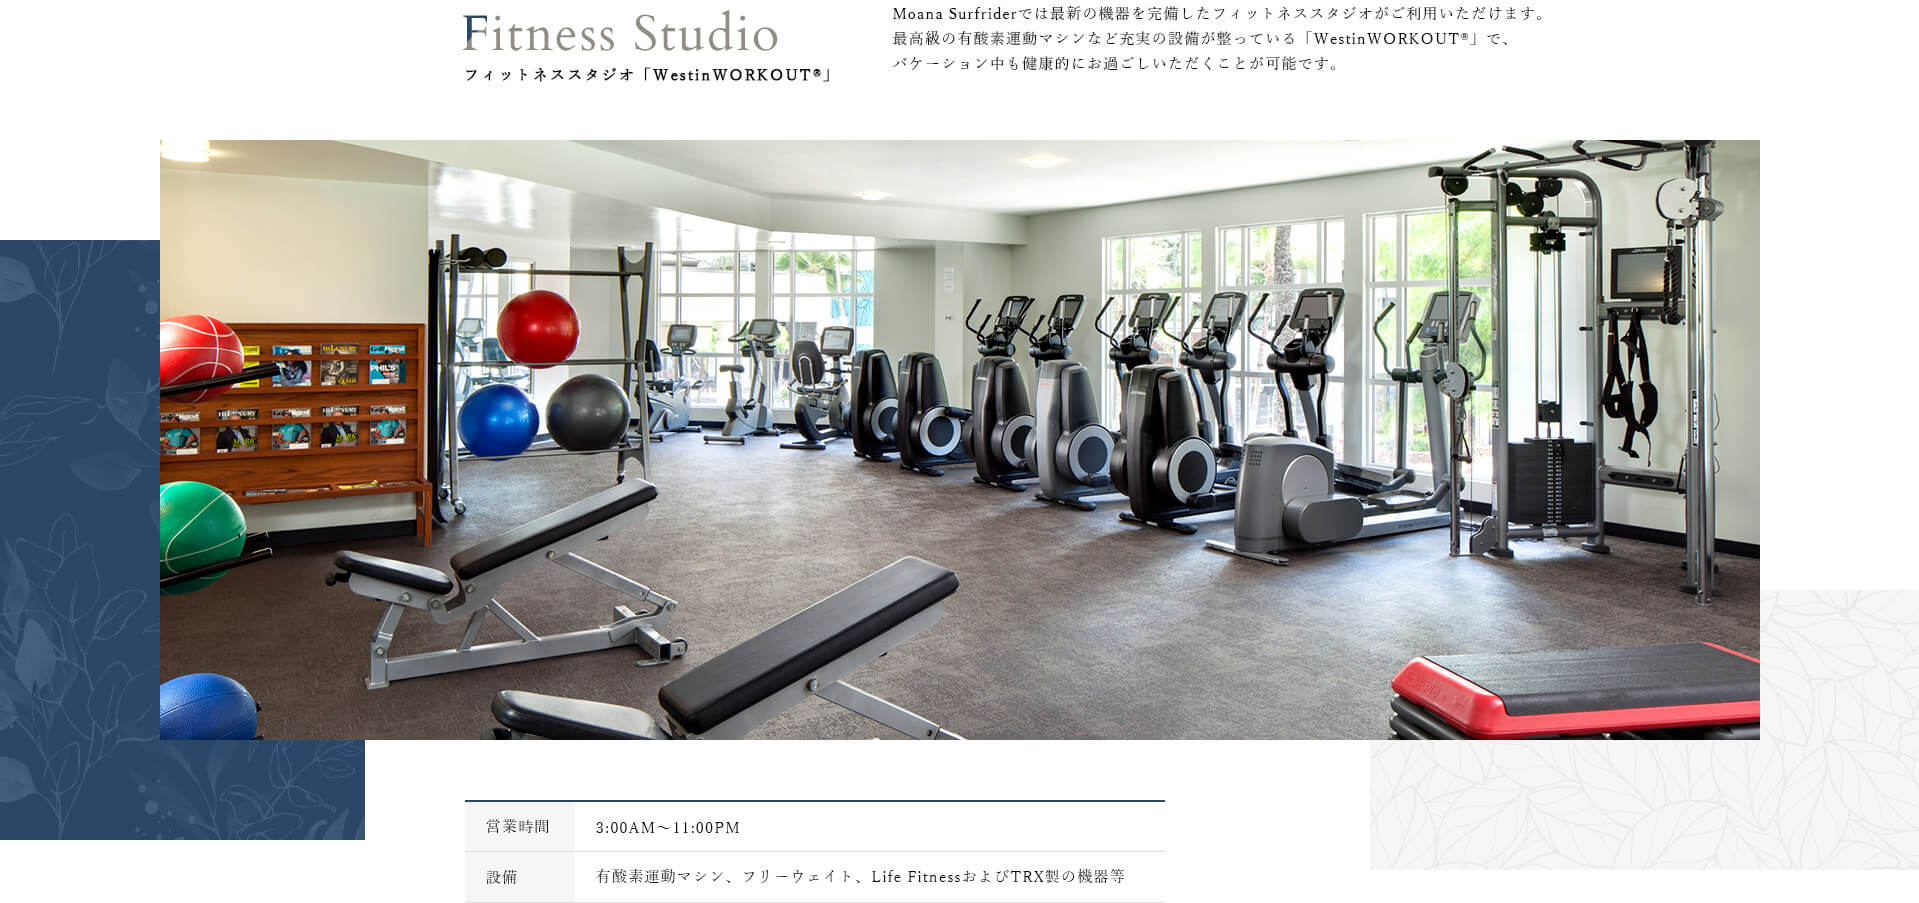 Fitness Studio フィットネススタジオ「WestinWORKOUT®」